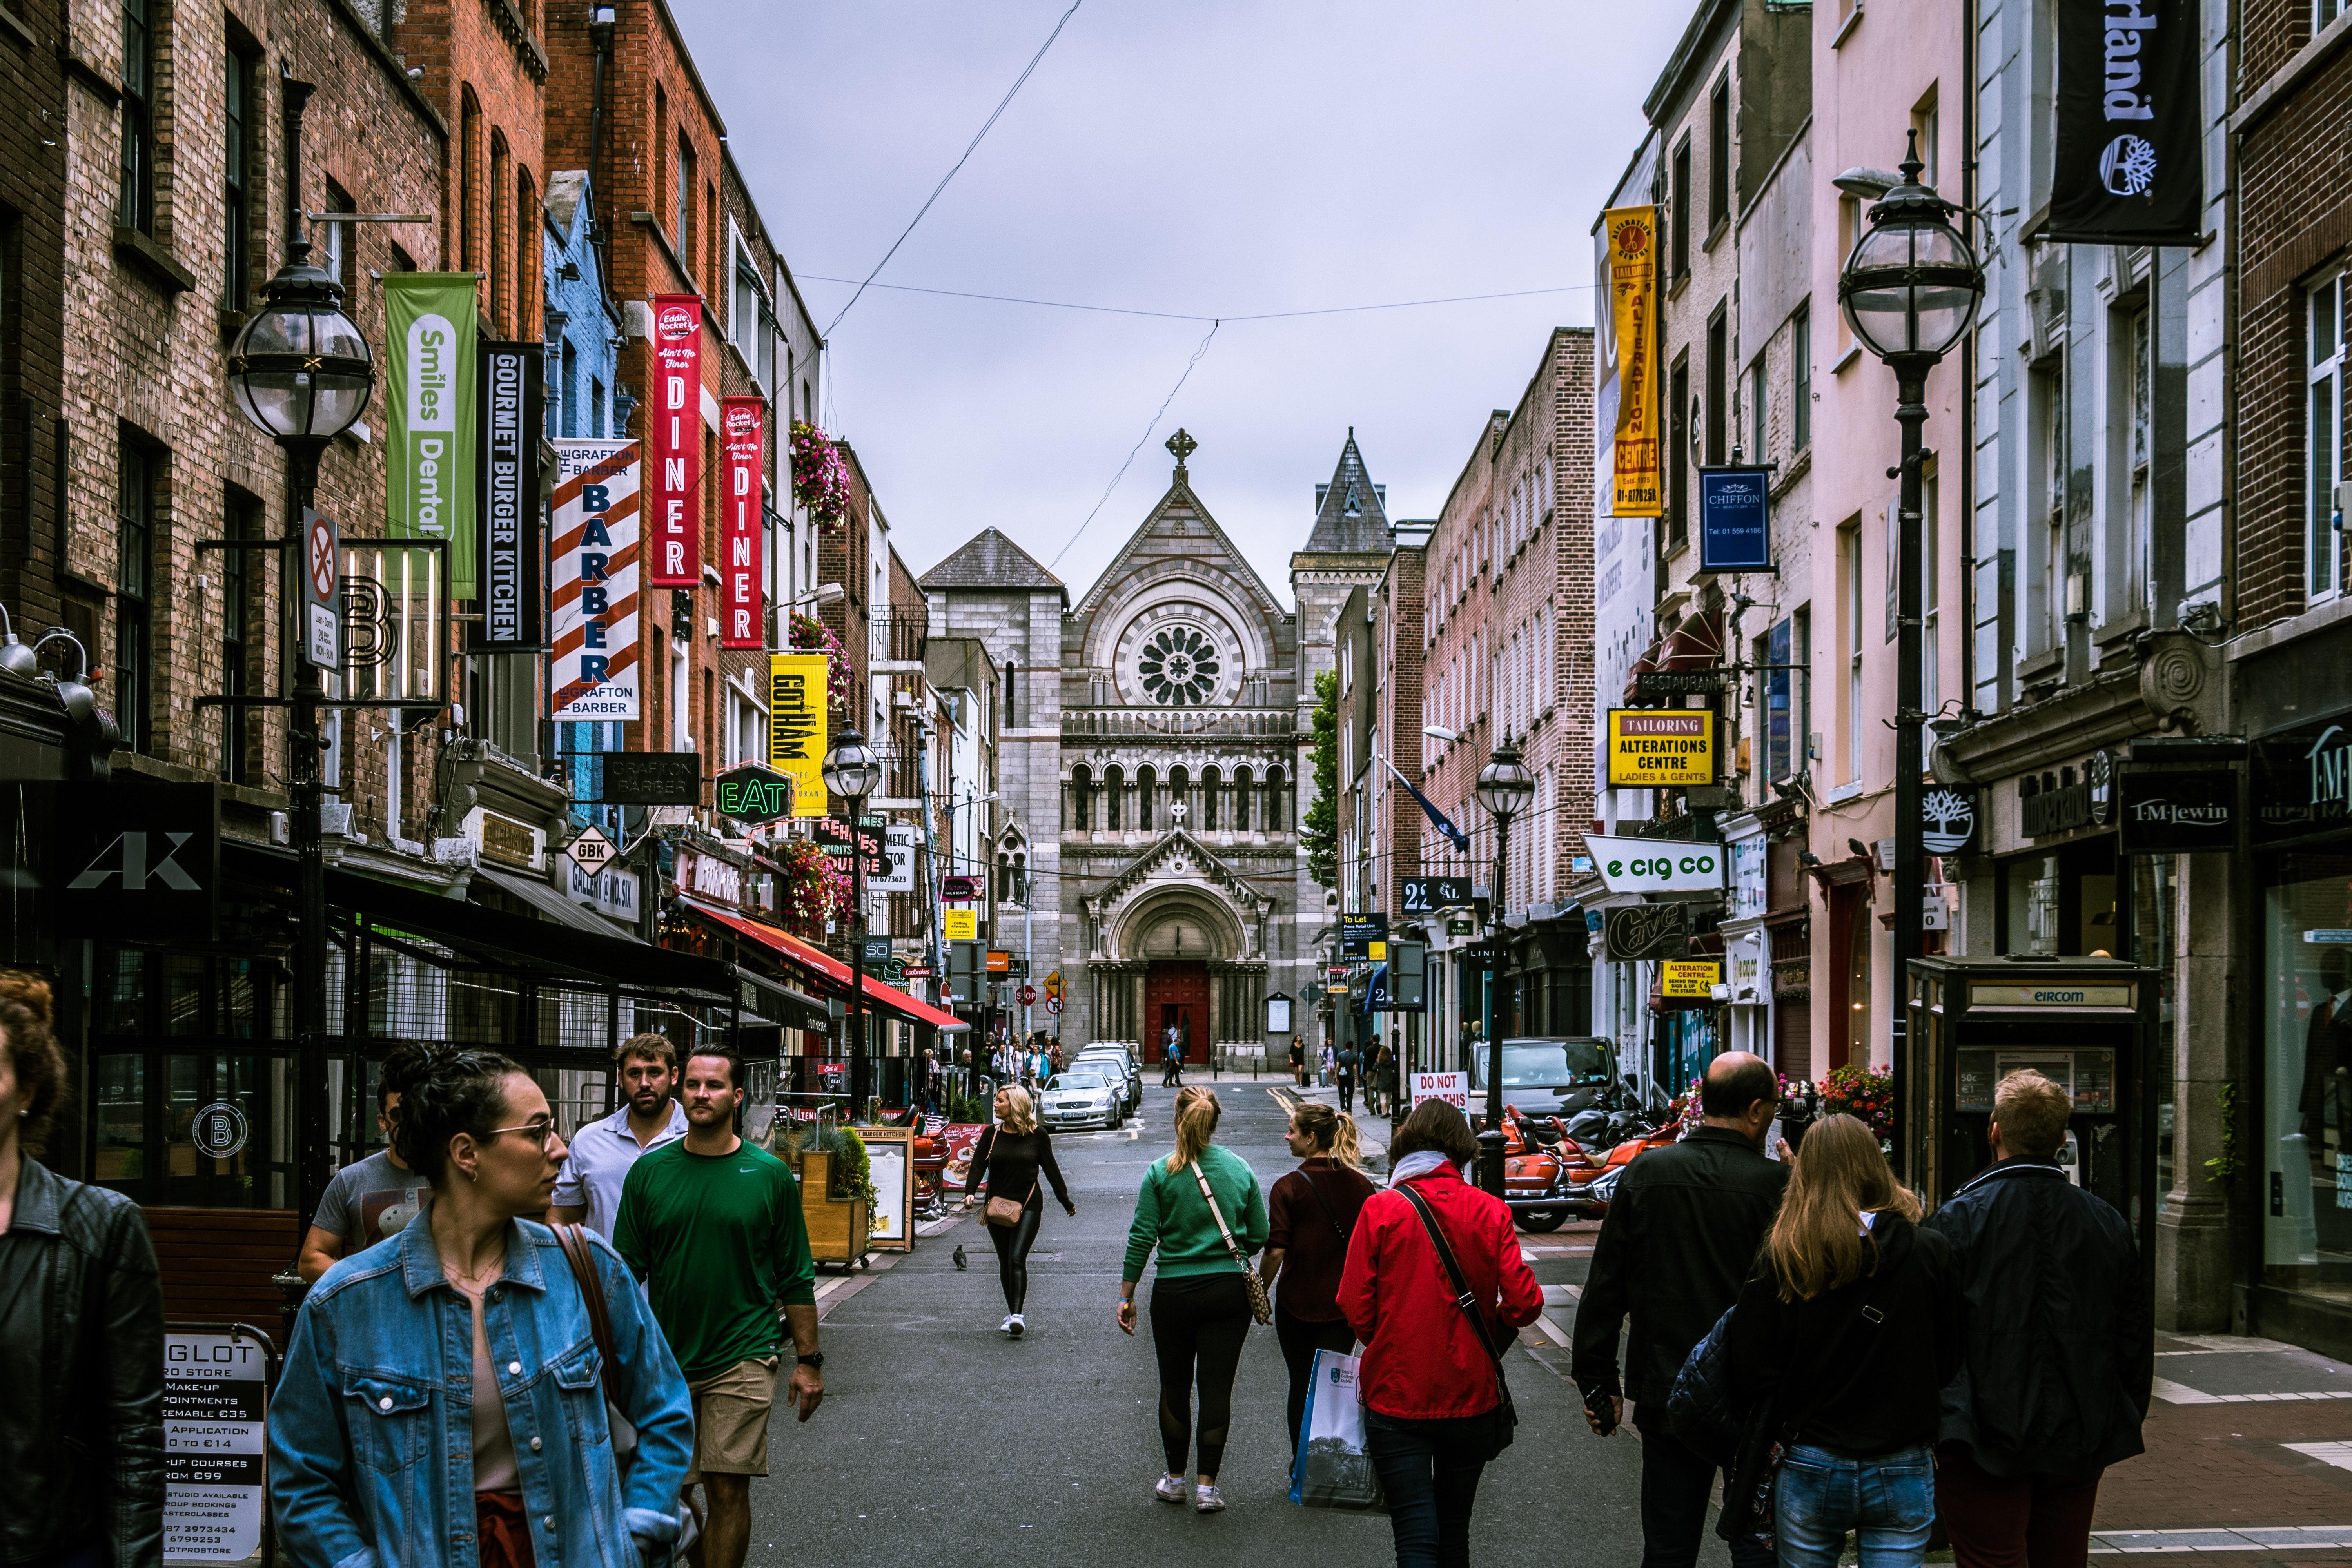 A group of people walking down a street in Dublin